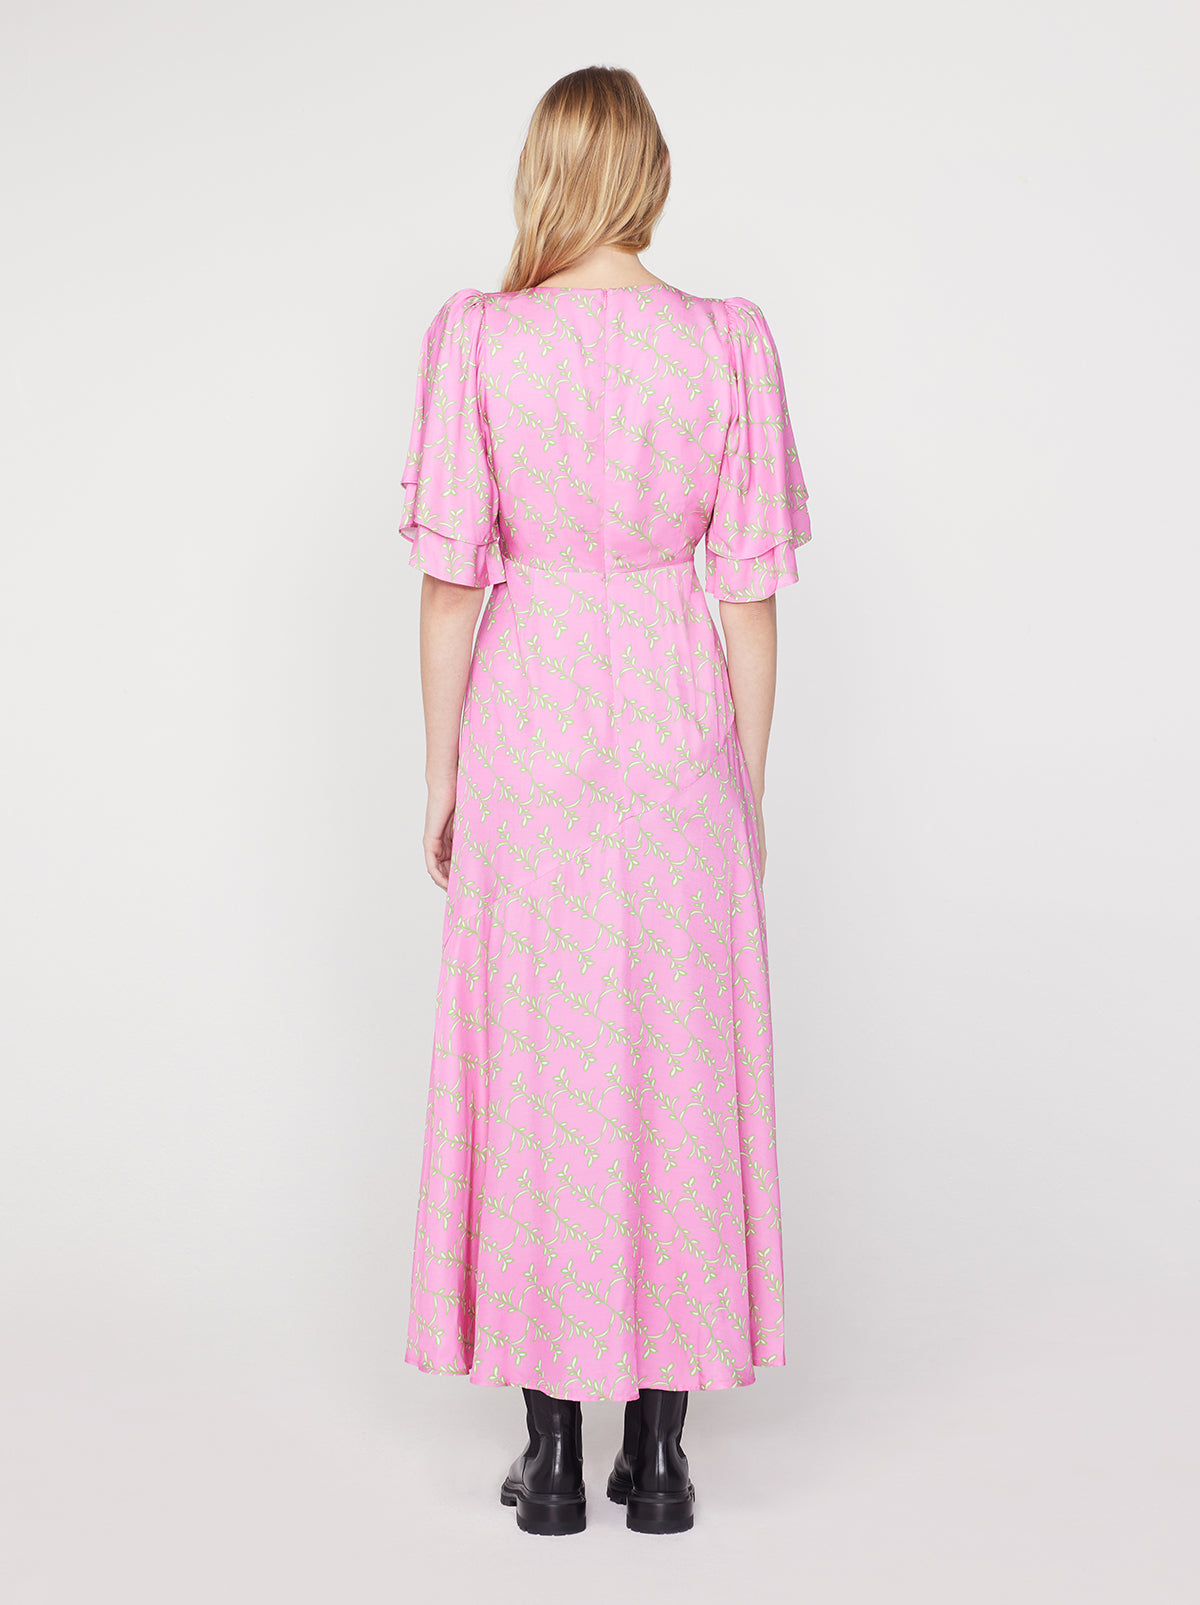 Tallulah Pink Foliage Print Maxi Dress By KITRI Studio